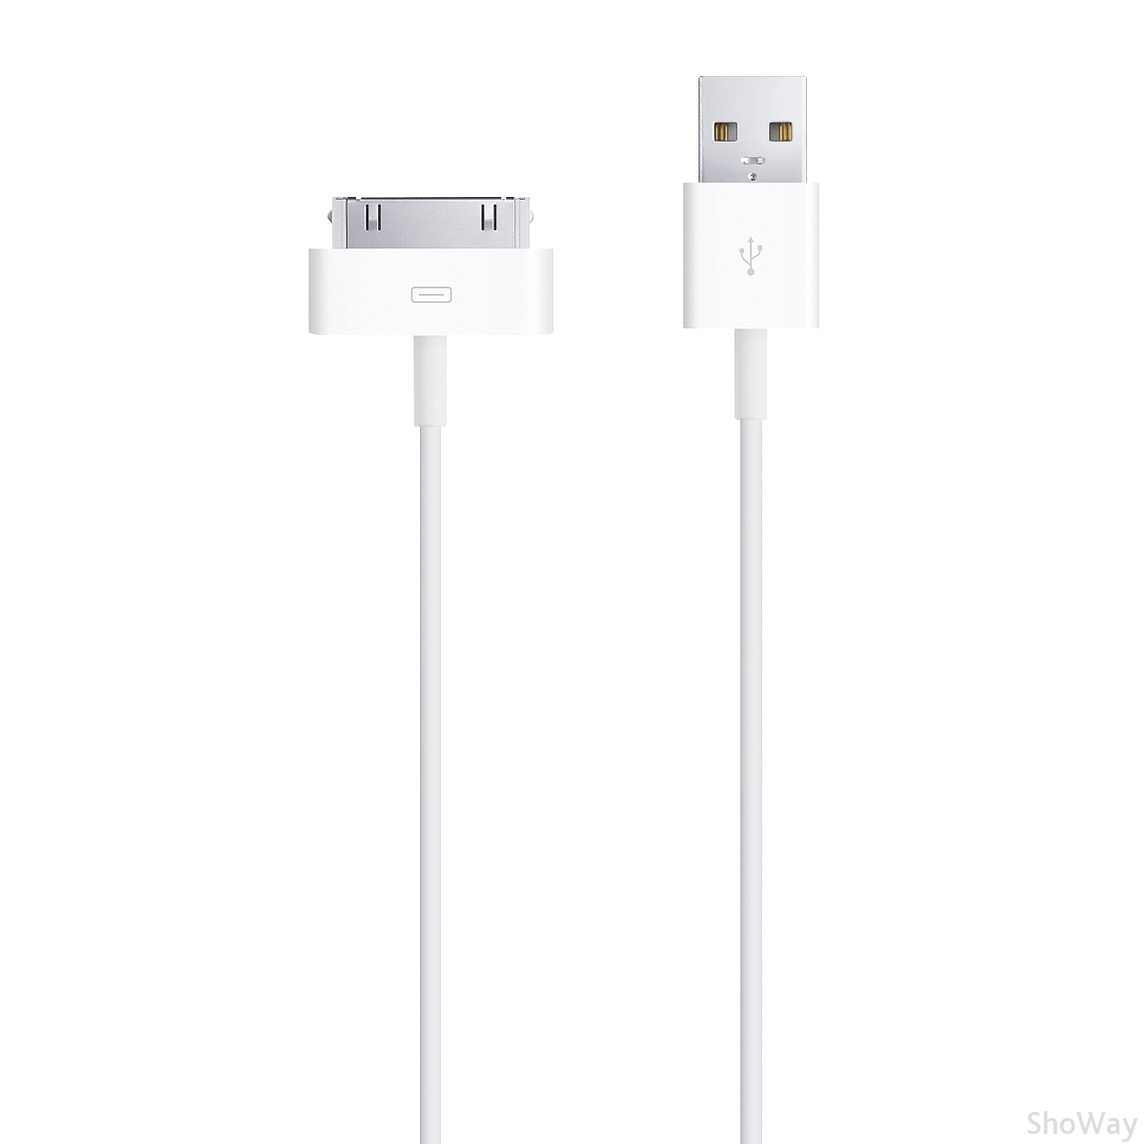 Купить зарядку эпл. Apple 30 Pin to USB Cable. Кабель iphone 4/4s ma591g. Кабель Apple USB - Apple 30 Pin (ma591zm/c) 1 м. Кабель Apple USB-C muf72zm (1 метр).